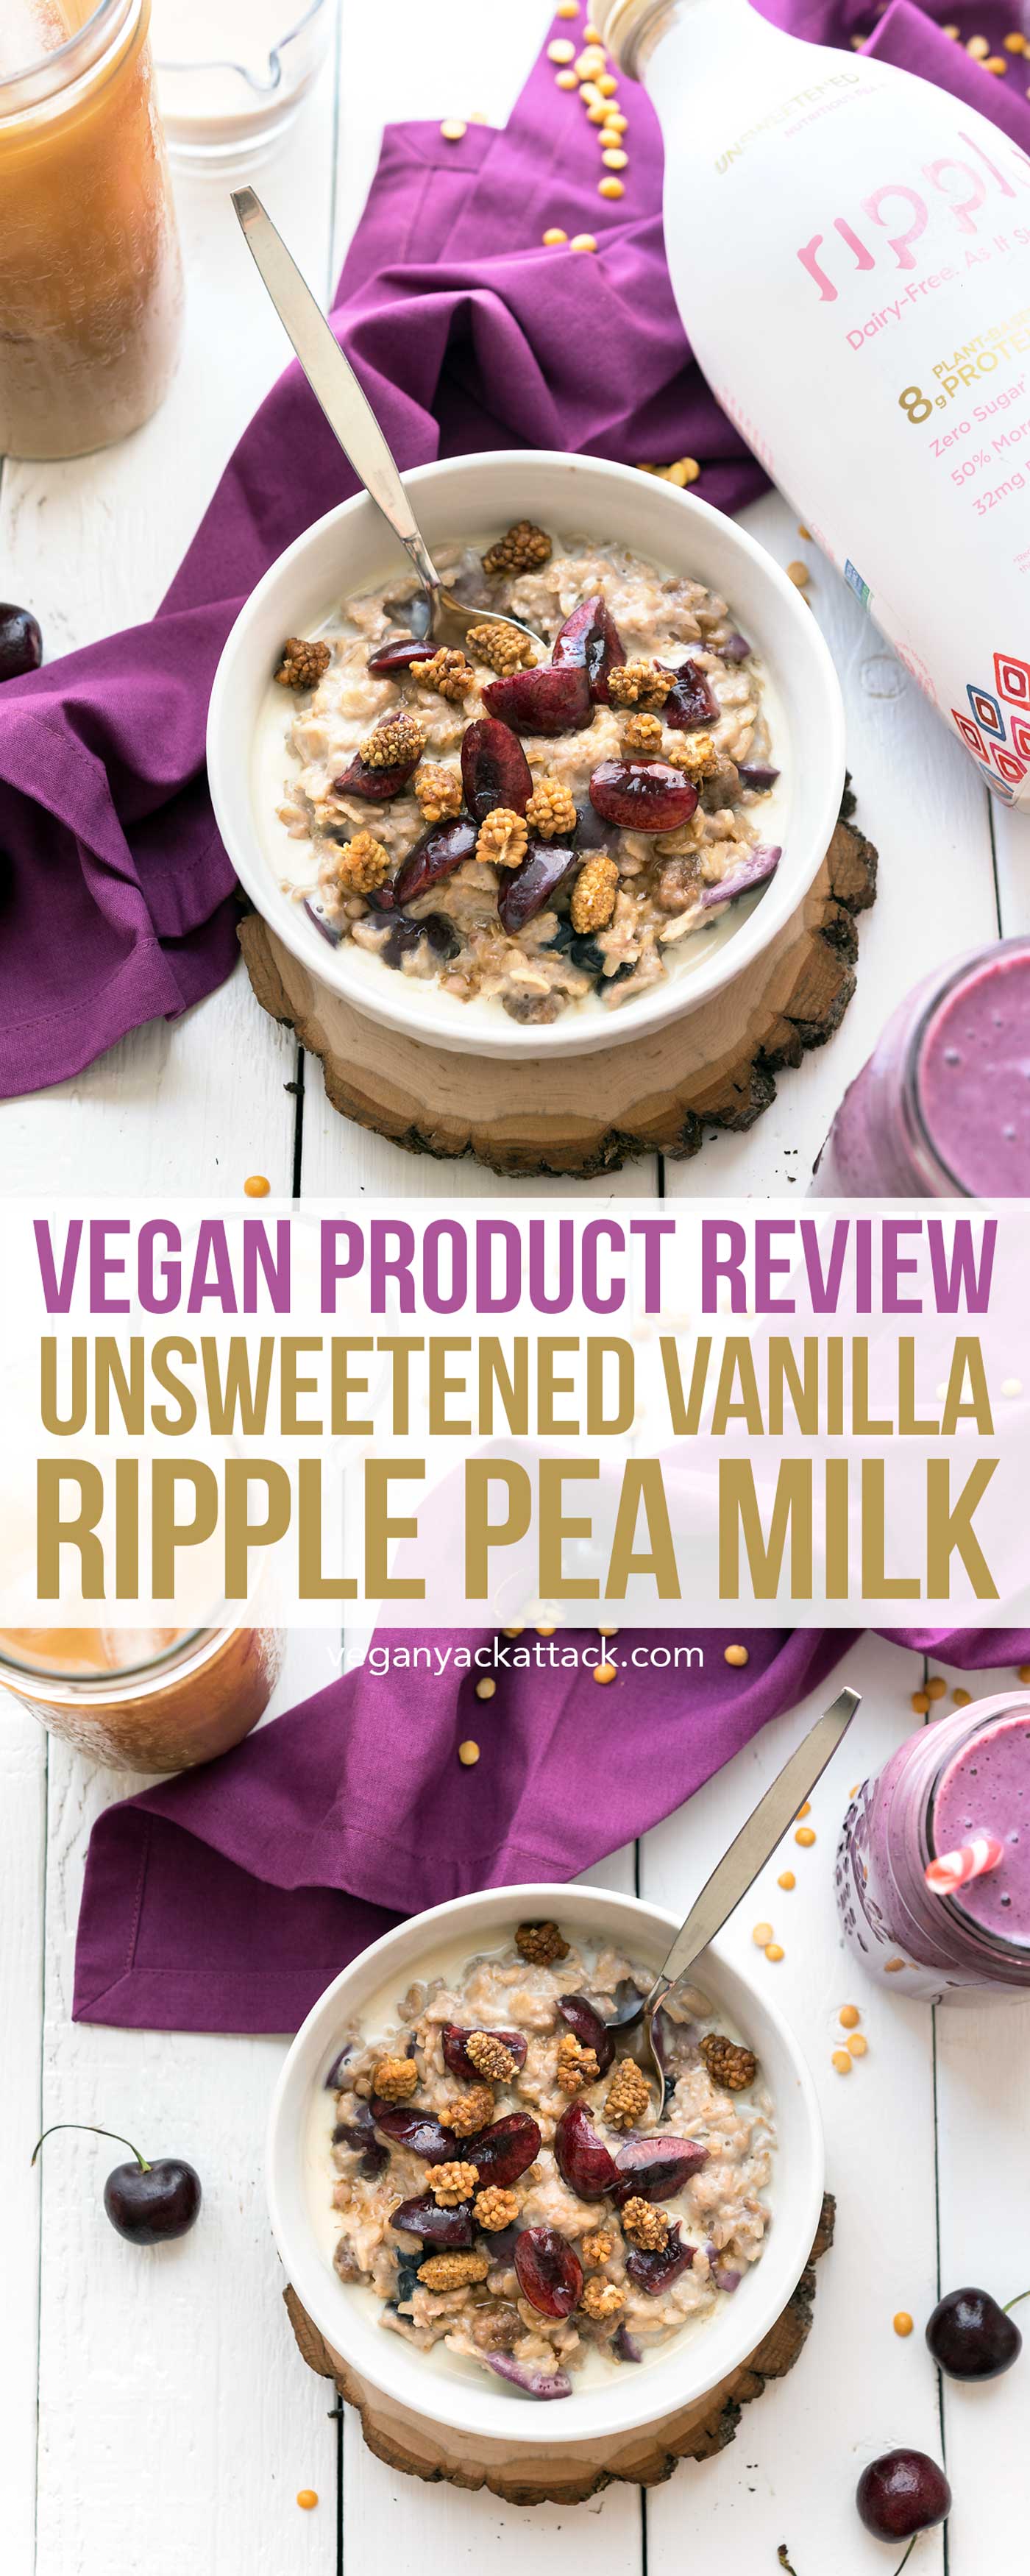 New Product Review! Unsweetened Vanilla Ripple Pea Milk - High in protein, zero sugar, and allergy-friendly! #vegan #soyfree #nutfree #ripplefoods #dairyfreedom